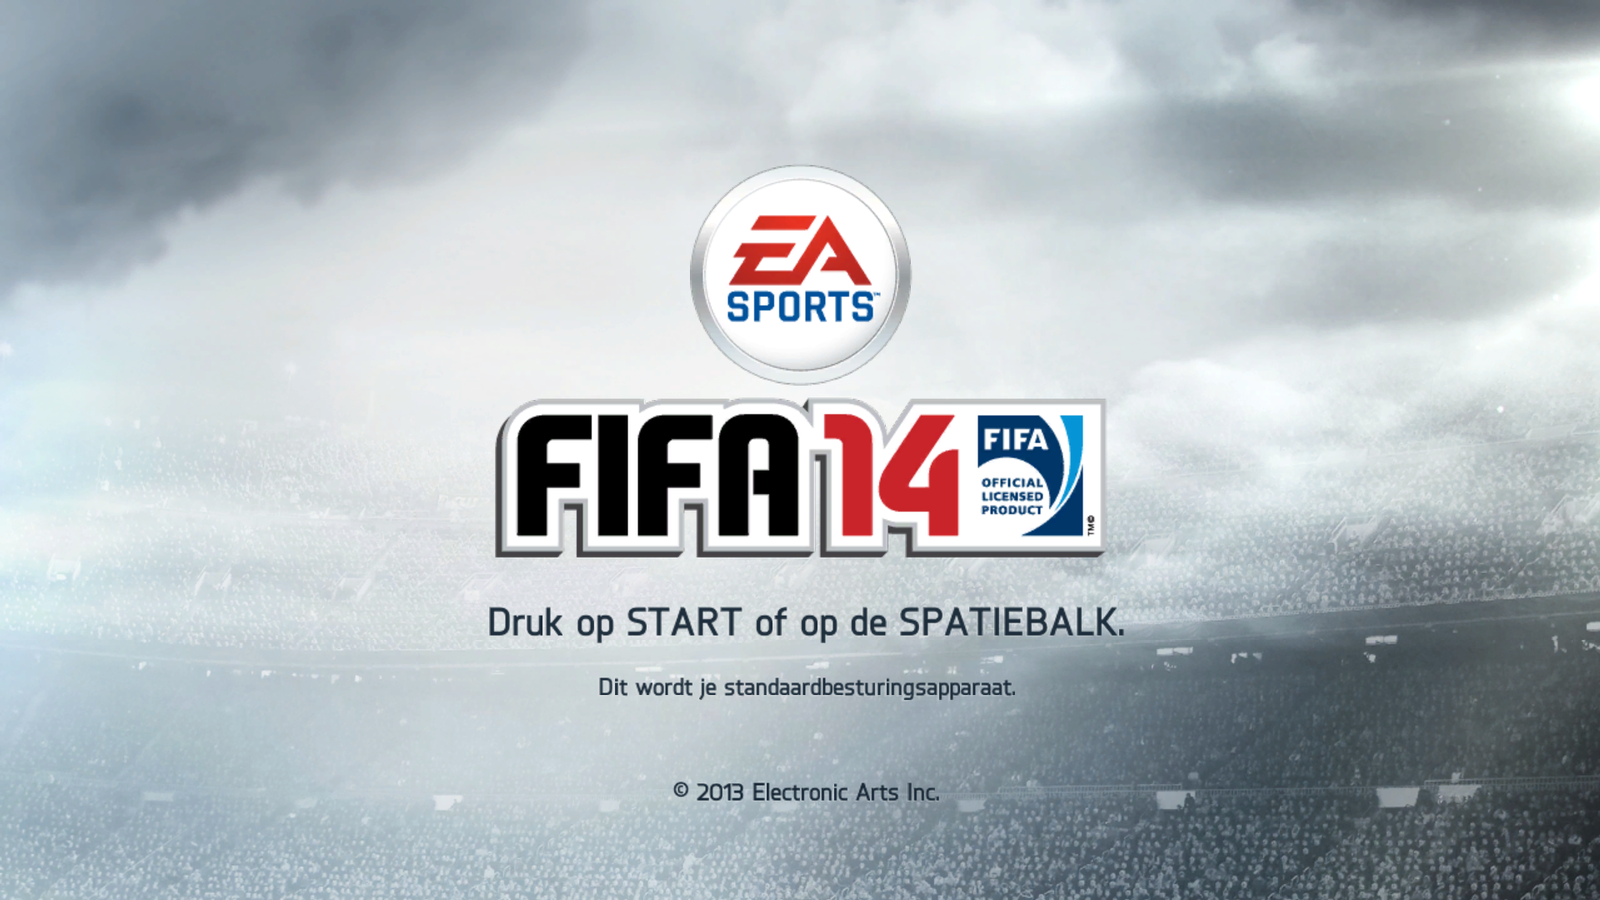 FIFA 14 ps3. FIFA 14 ps3 обложка. PLAYSTATION 3 FIFA 14. FIFA 14 ps3 Cover.